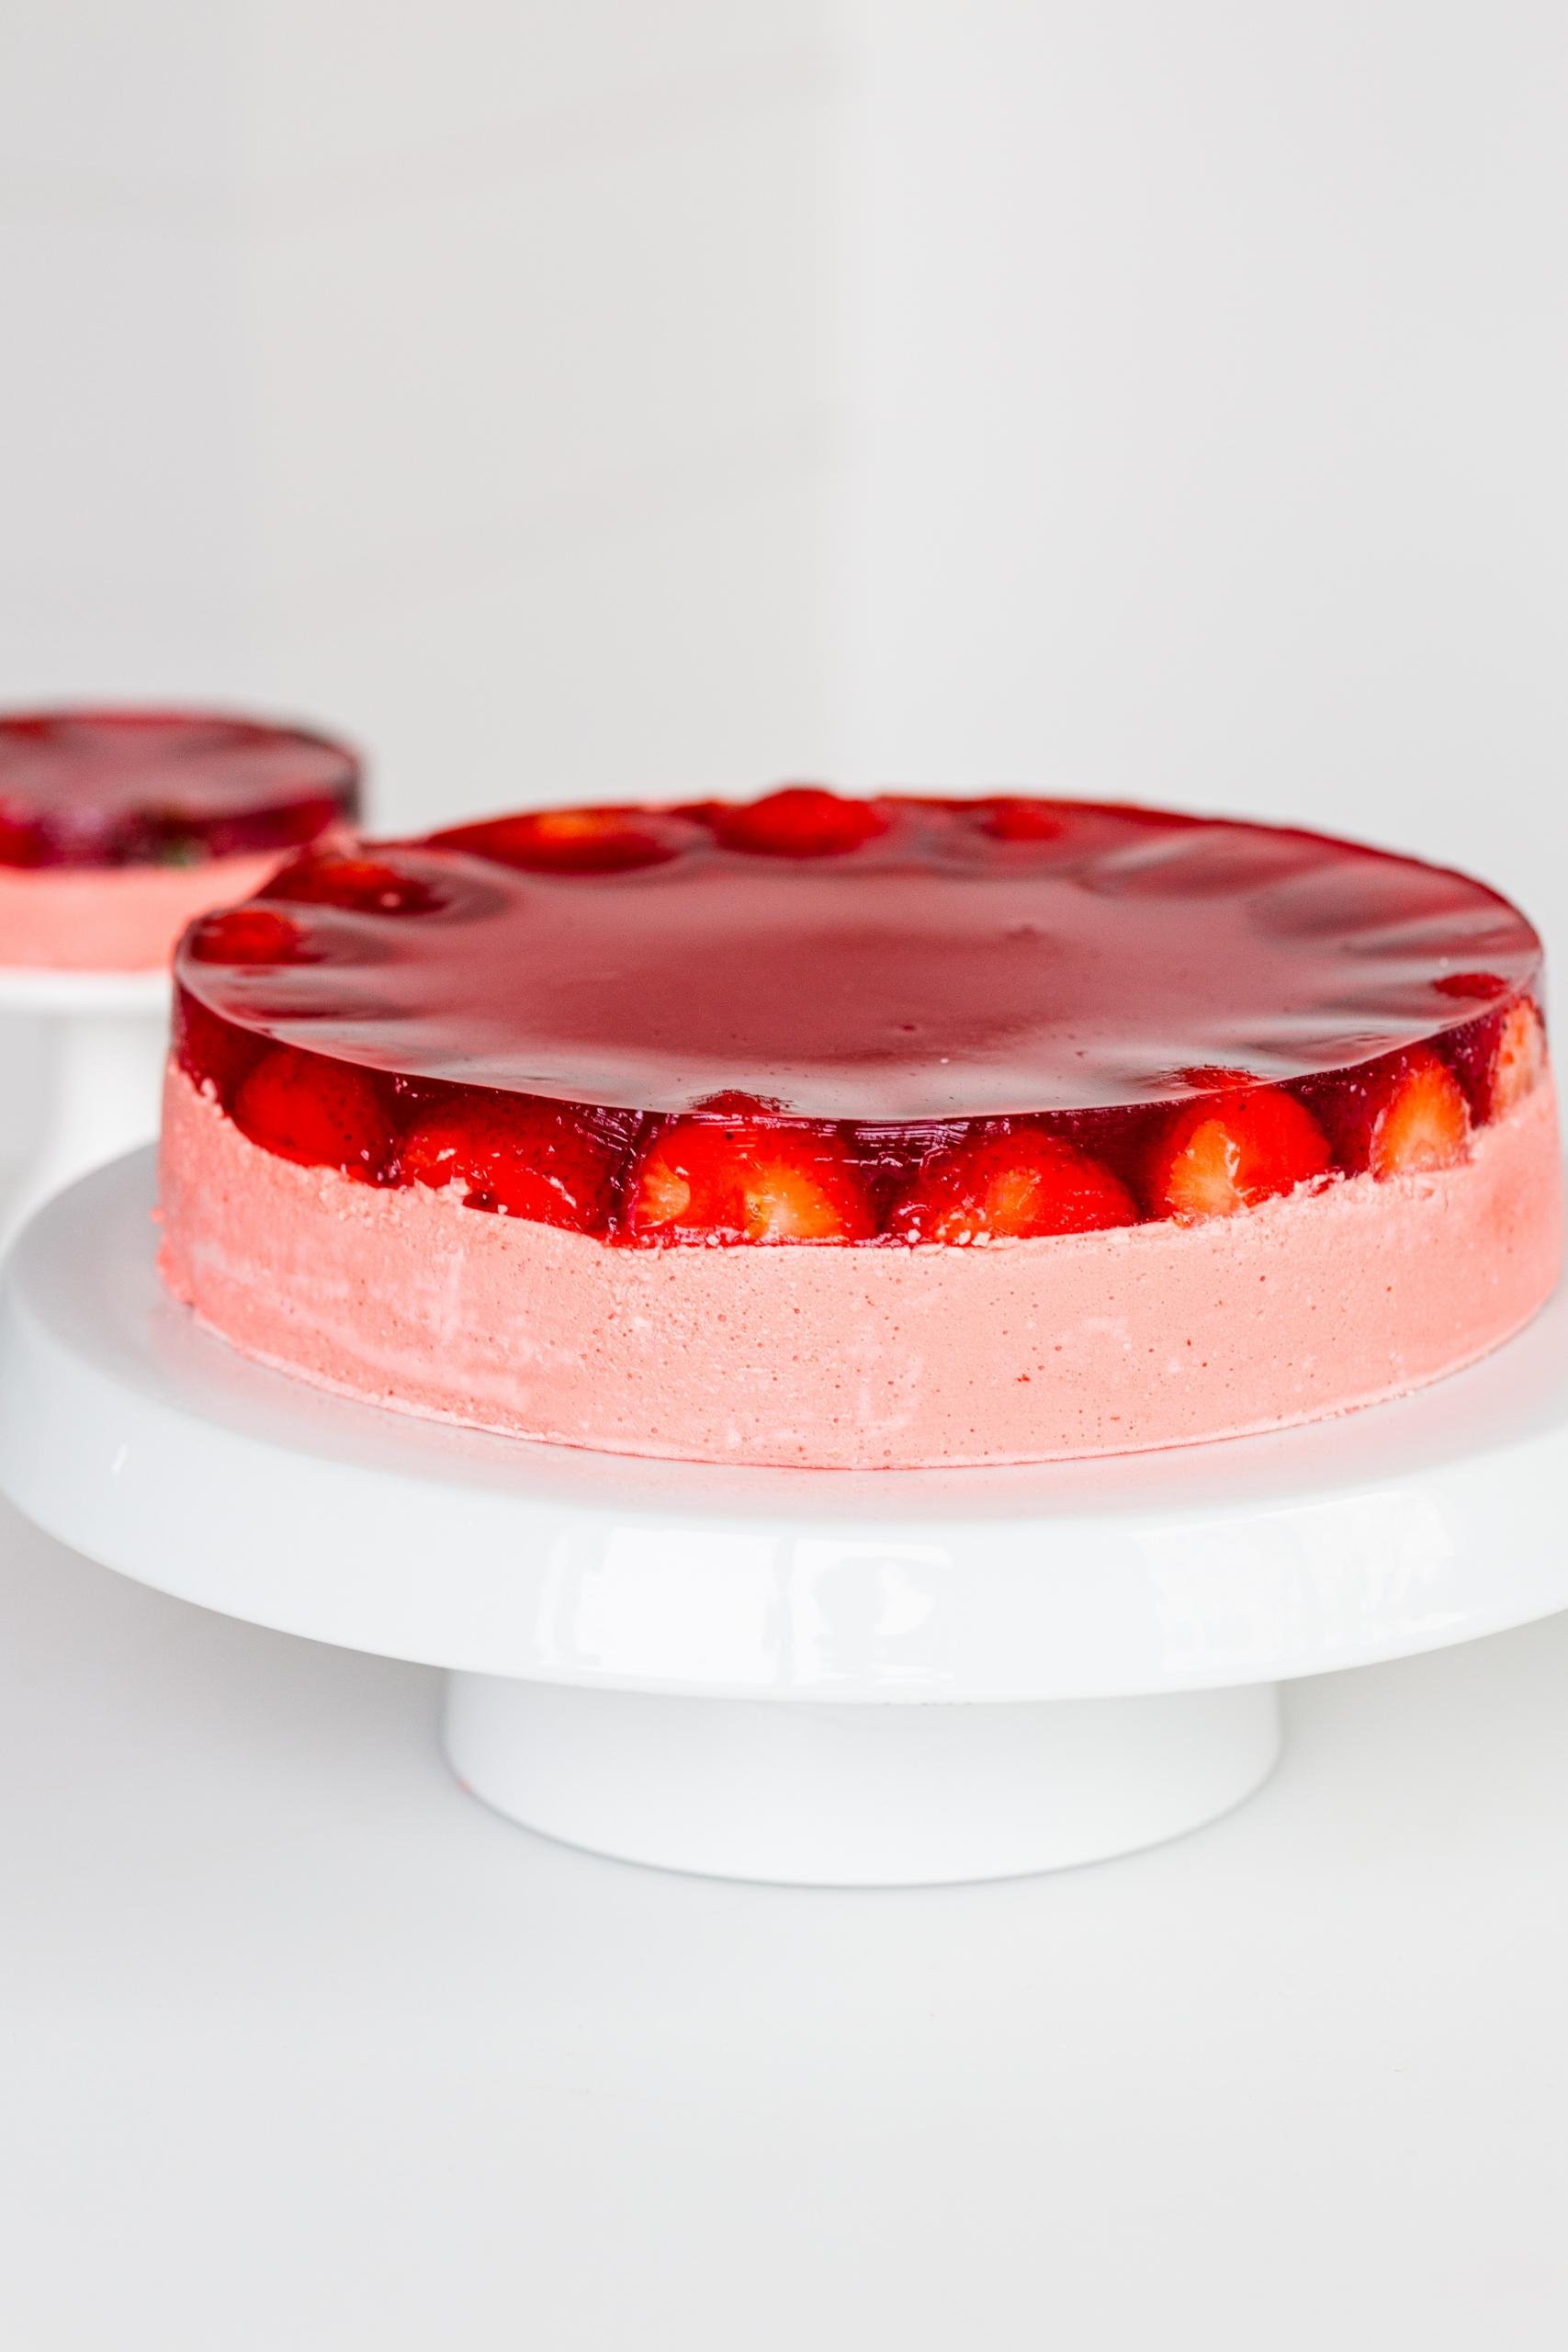 Strawberry Gelatin Cake